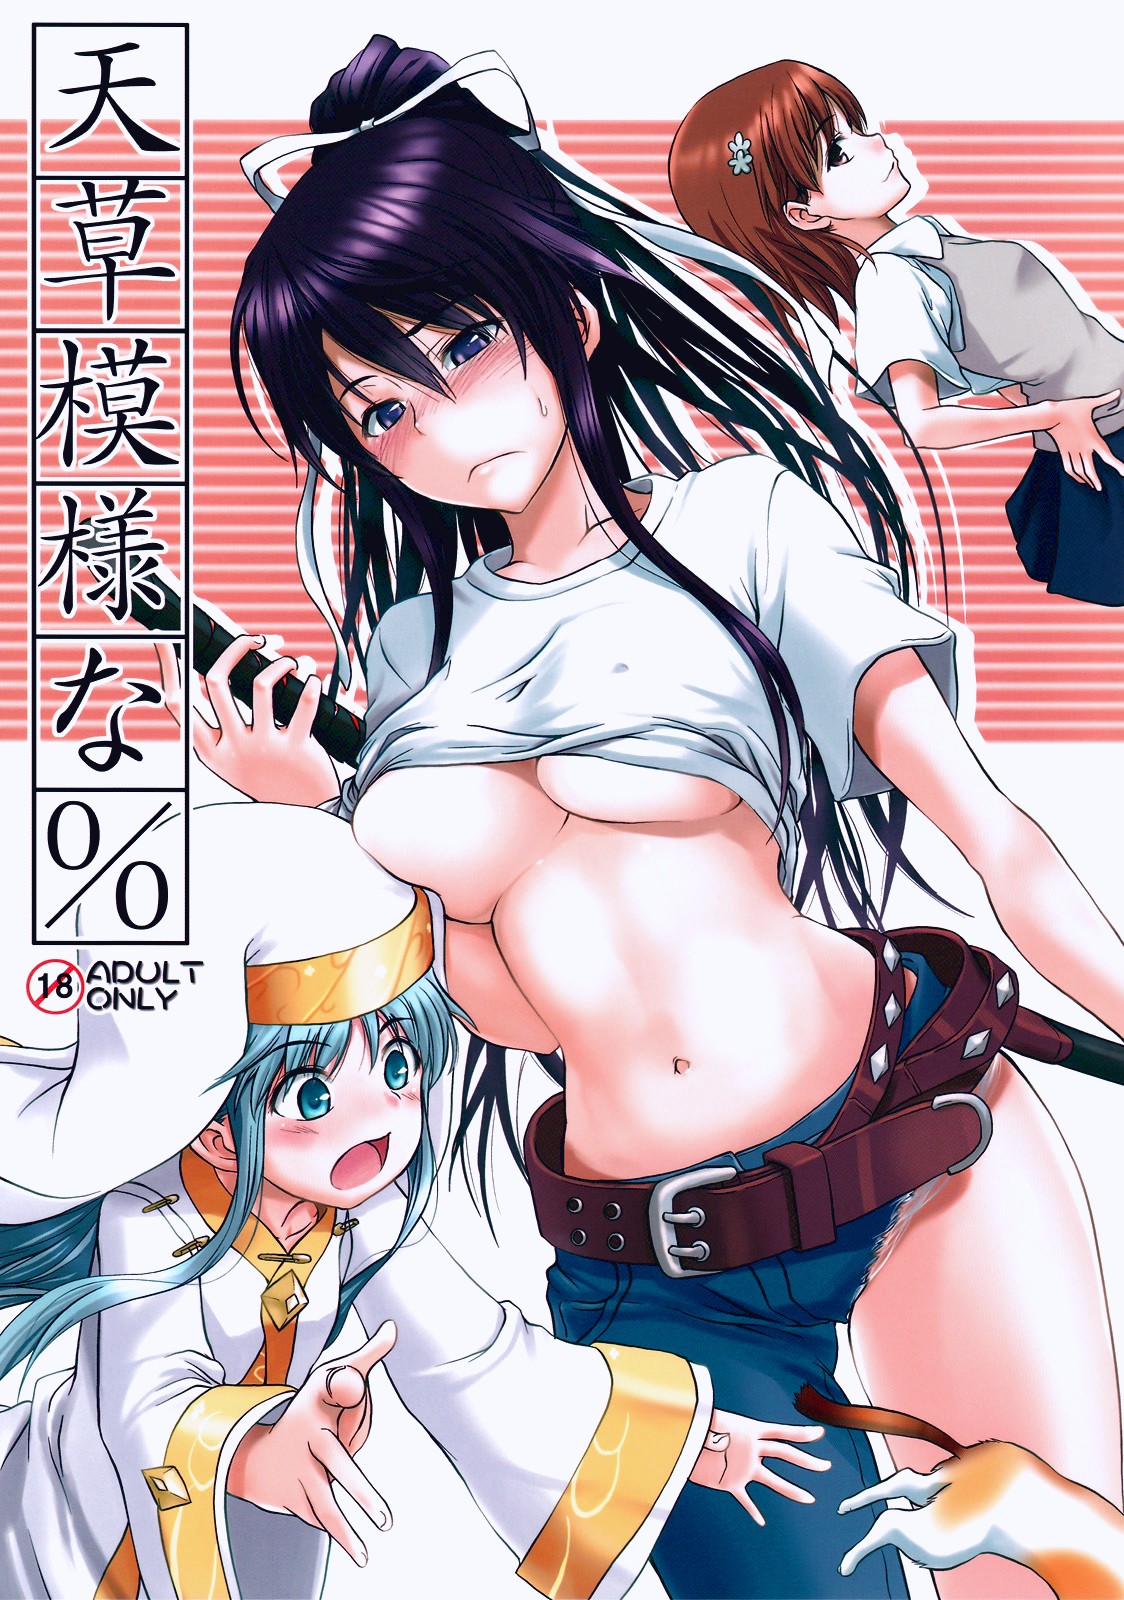 Amakusa Moyouna% hentai manga page 01 on category A Certain Magical Index